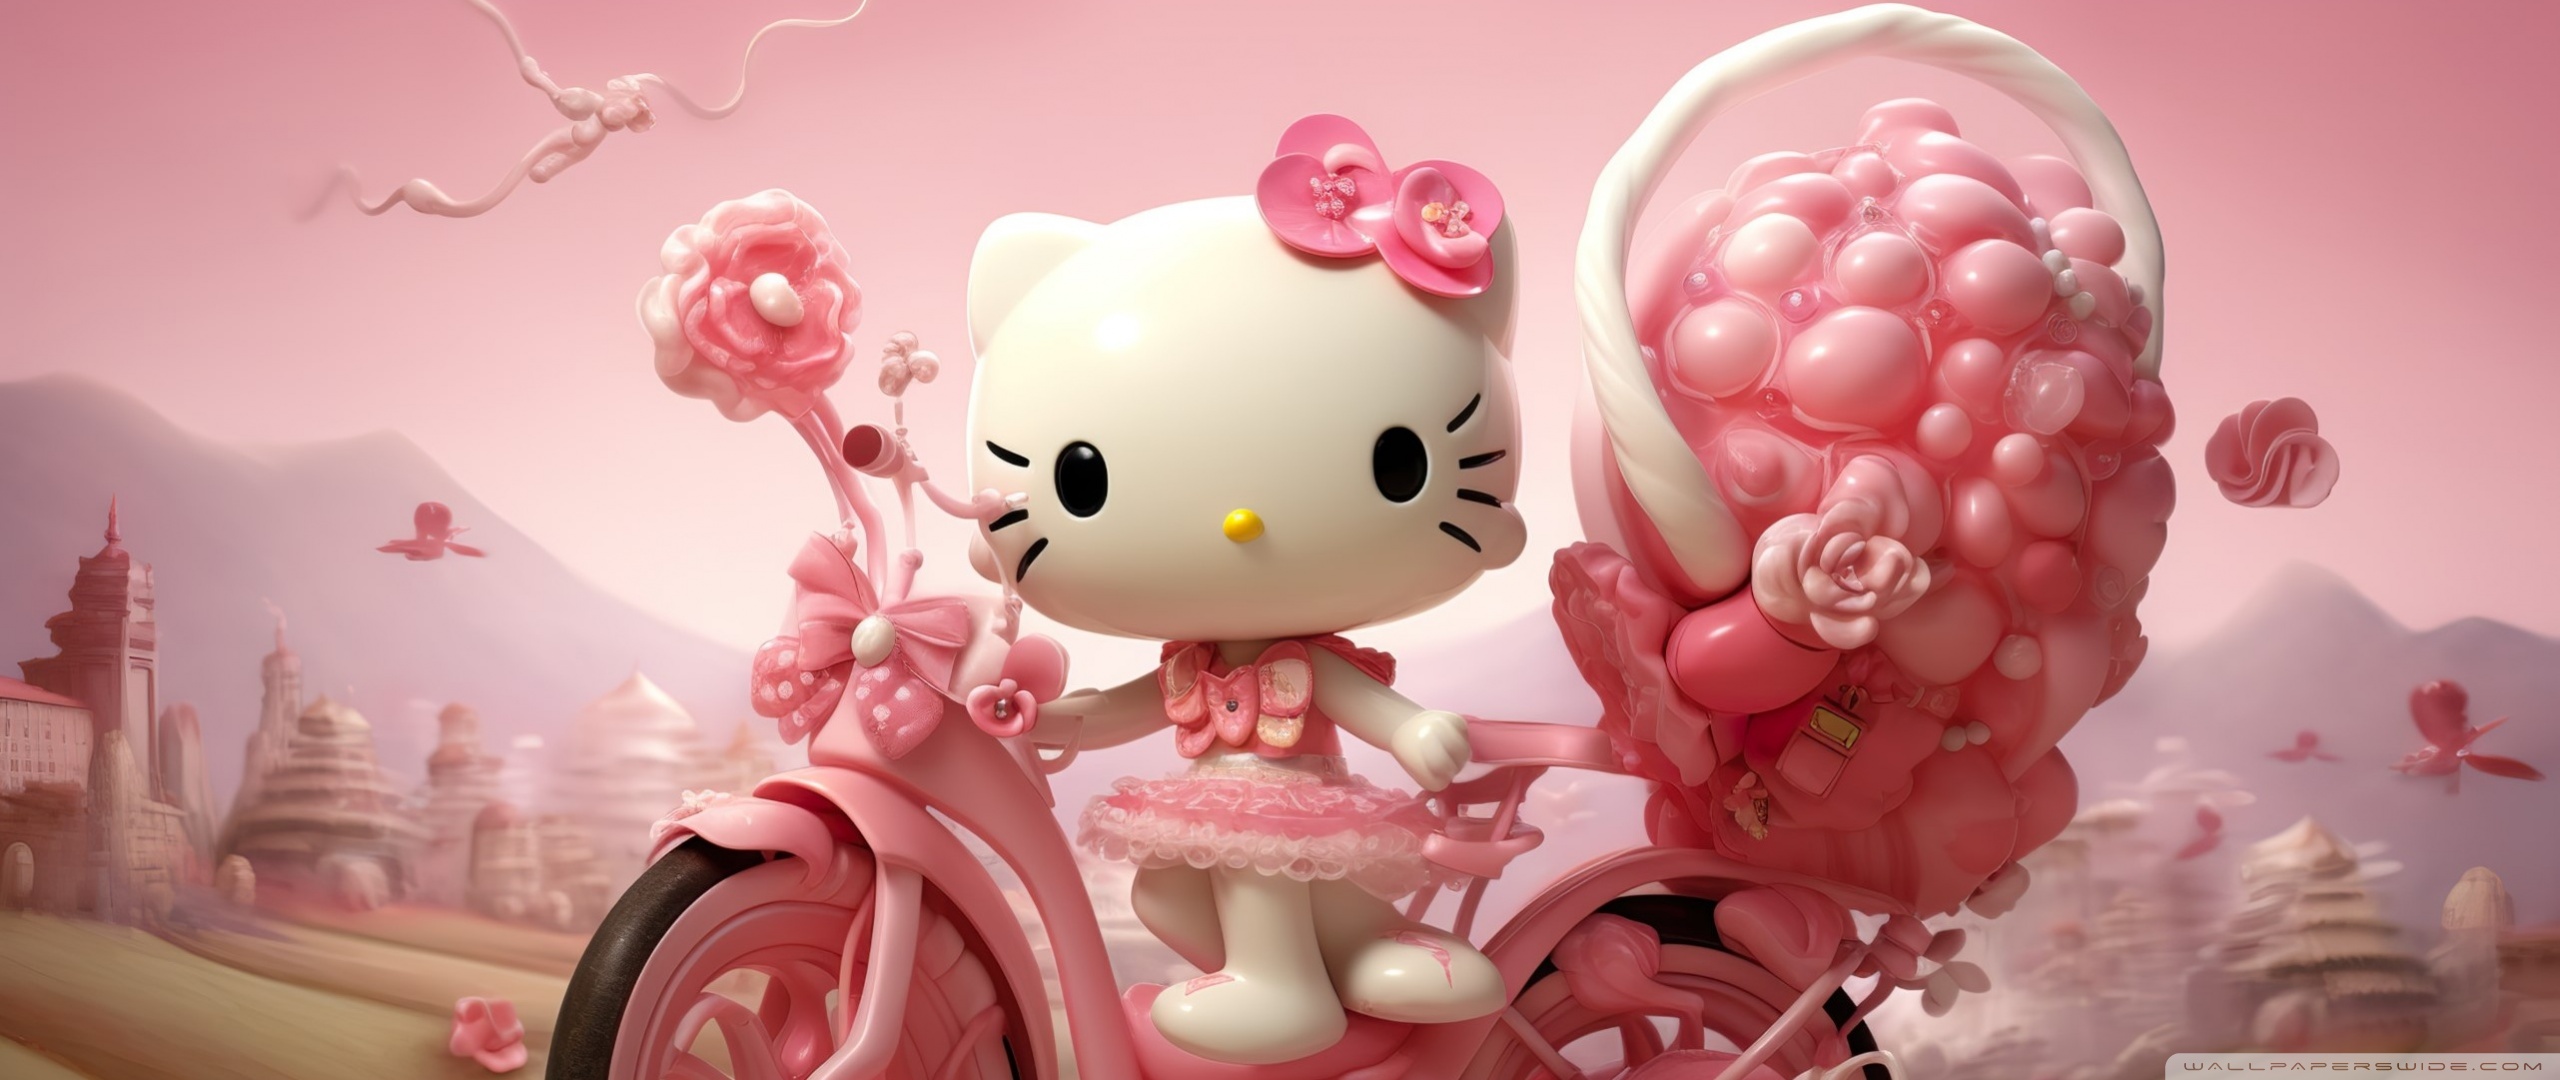 https://wallpaperswide.com/download/pink_hello_kitty_3d-wallpaper-2560x1080.jpg